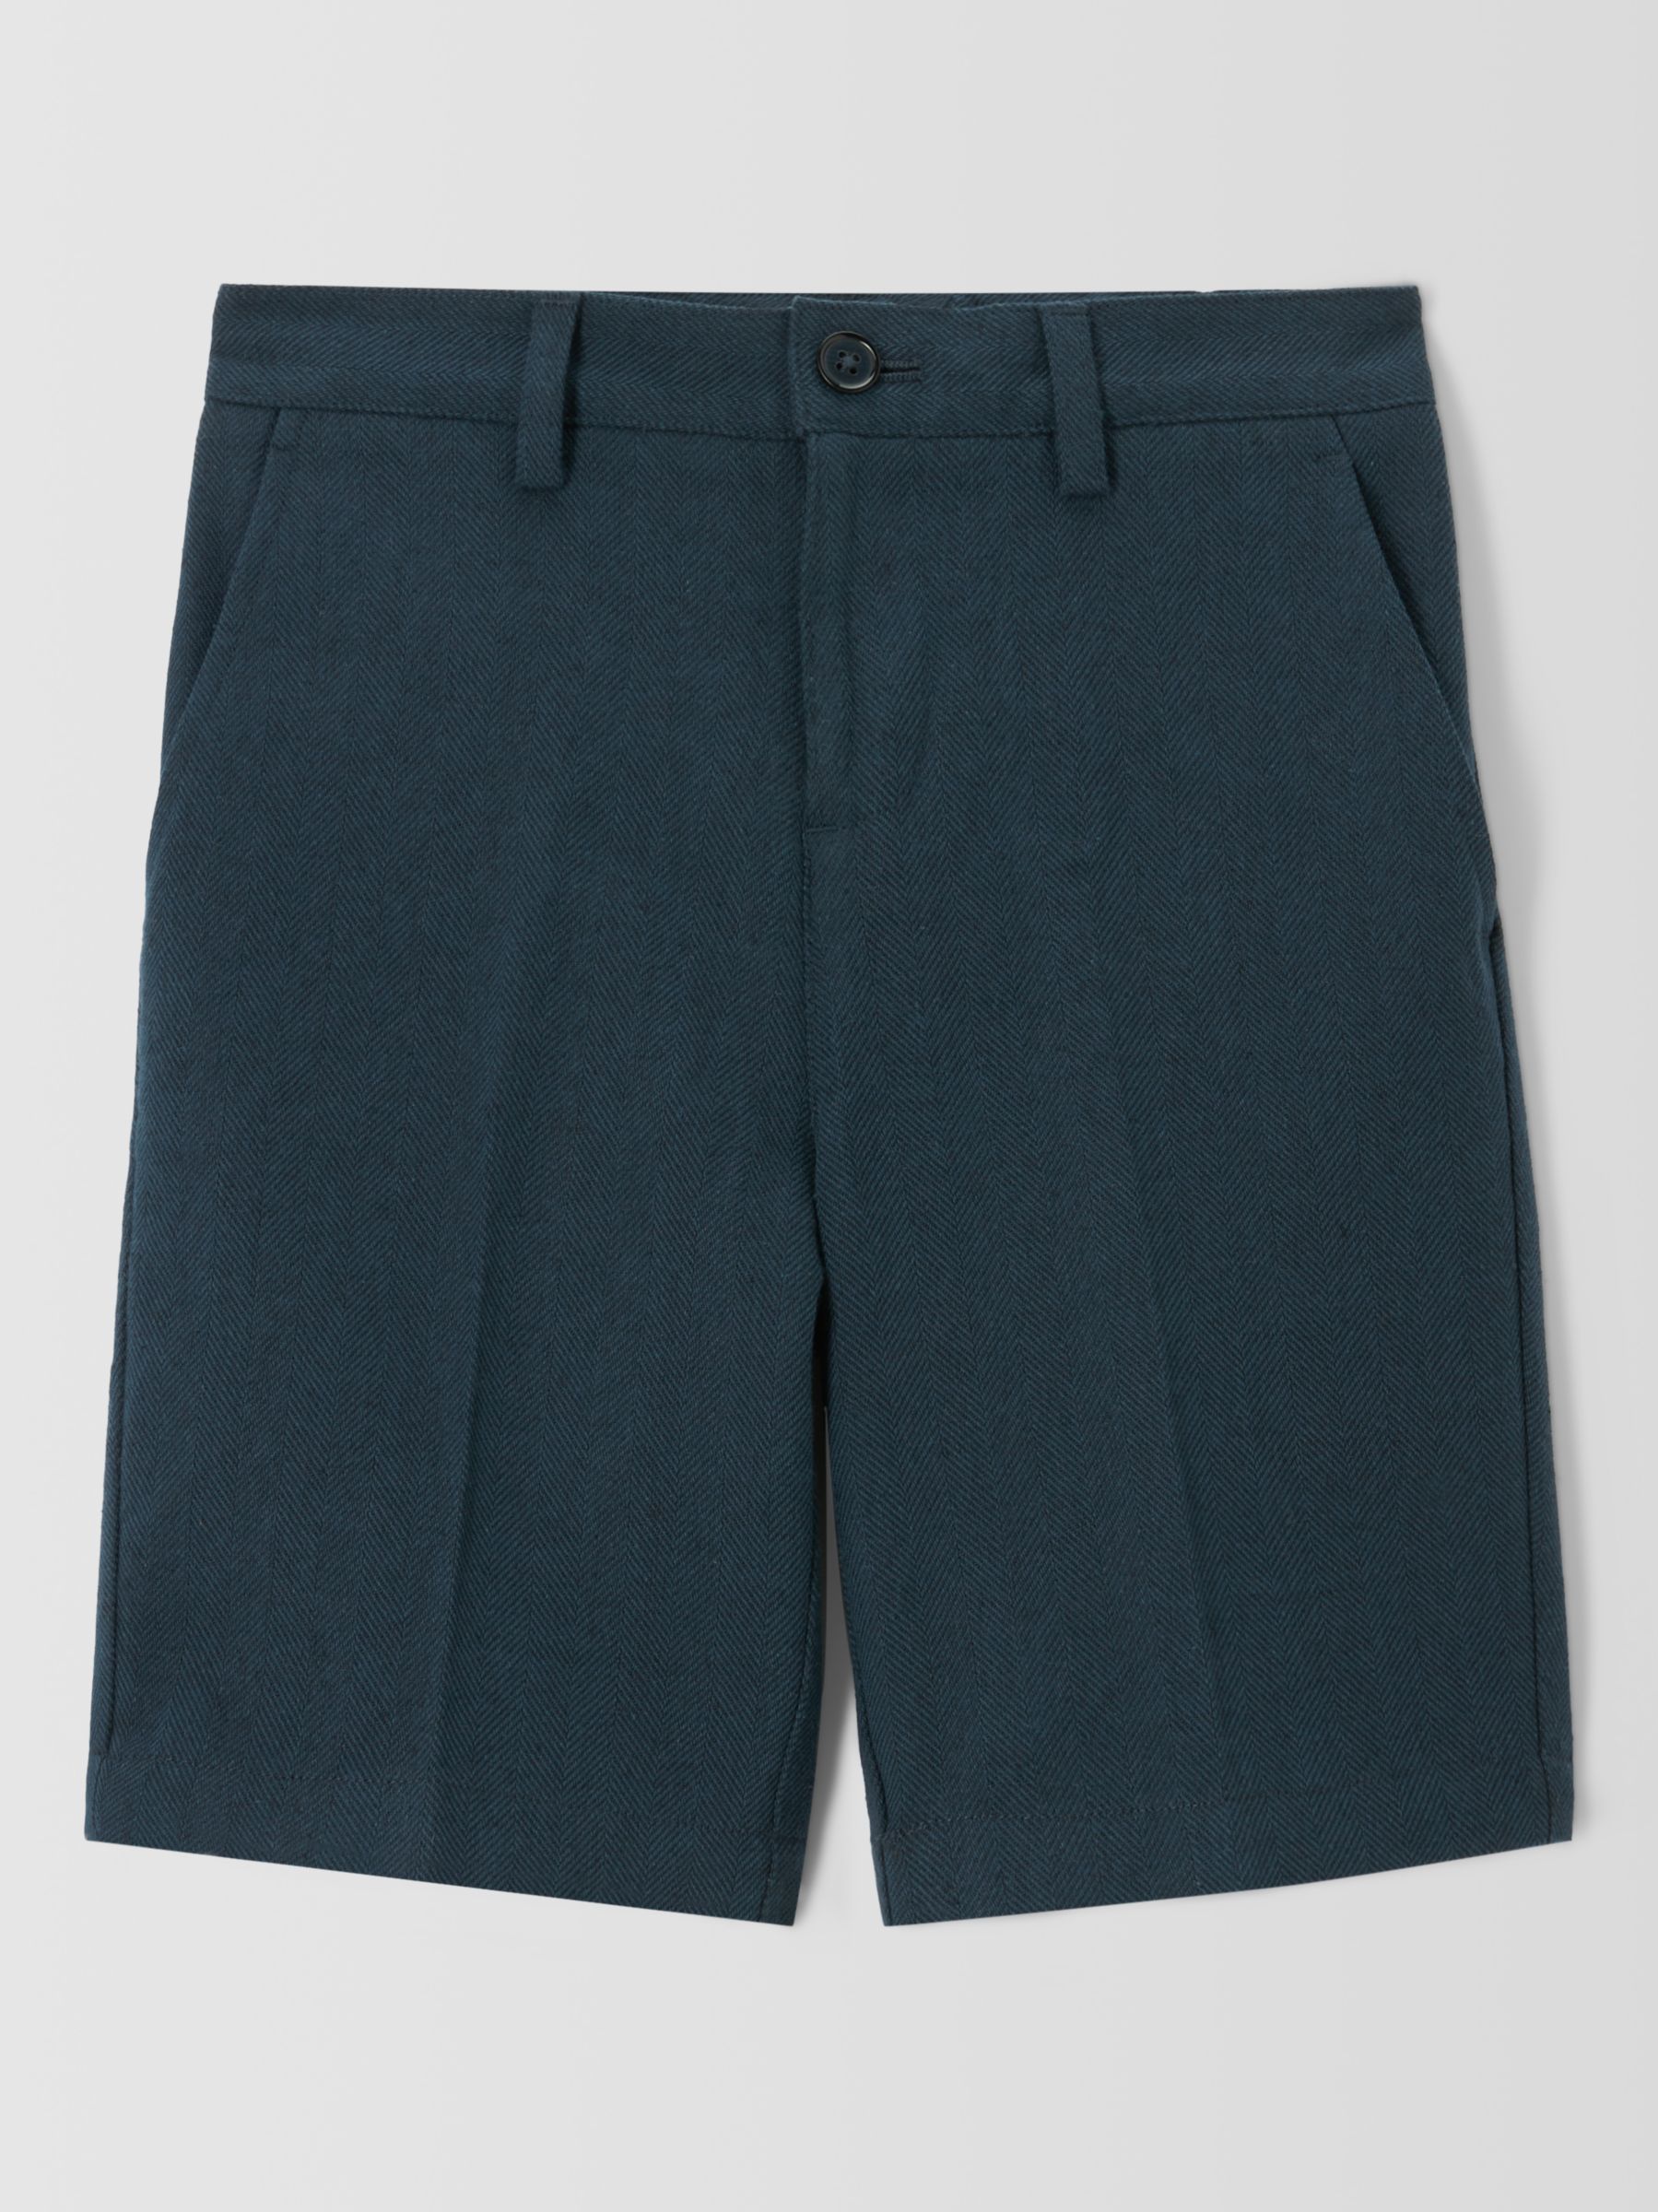 John Lewis Heirloom Collection Kids' Linen Blend Shorts, Navy, 3 years